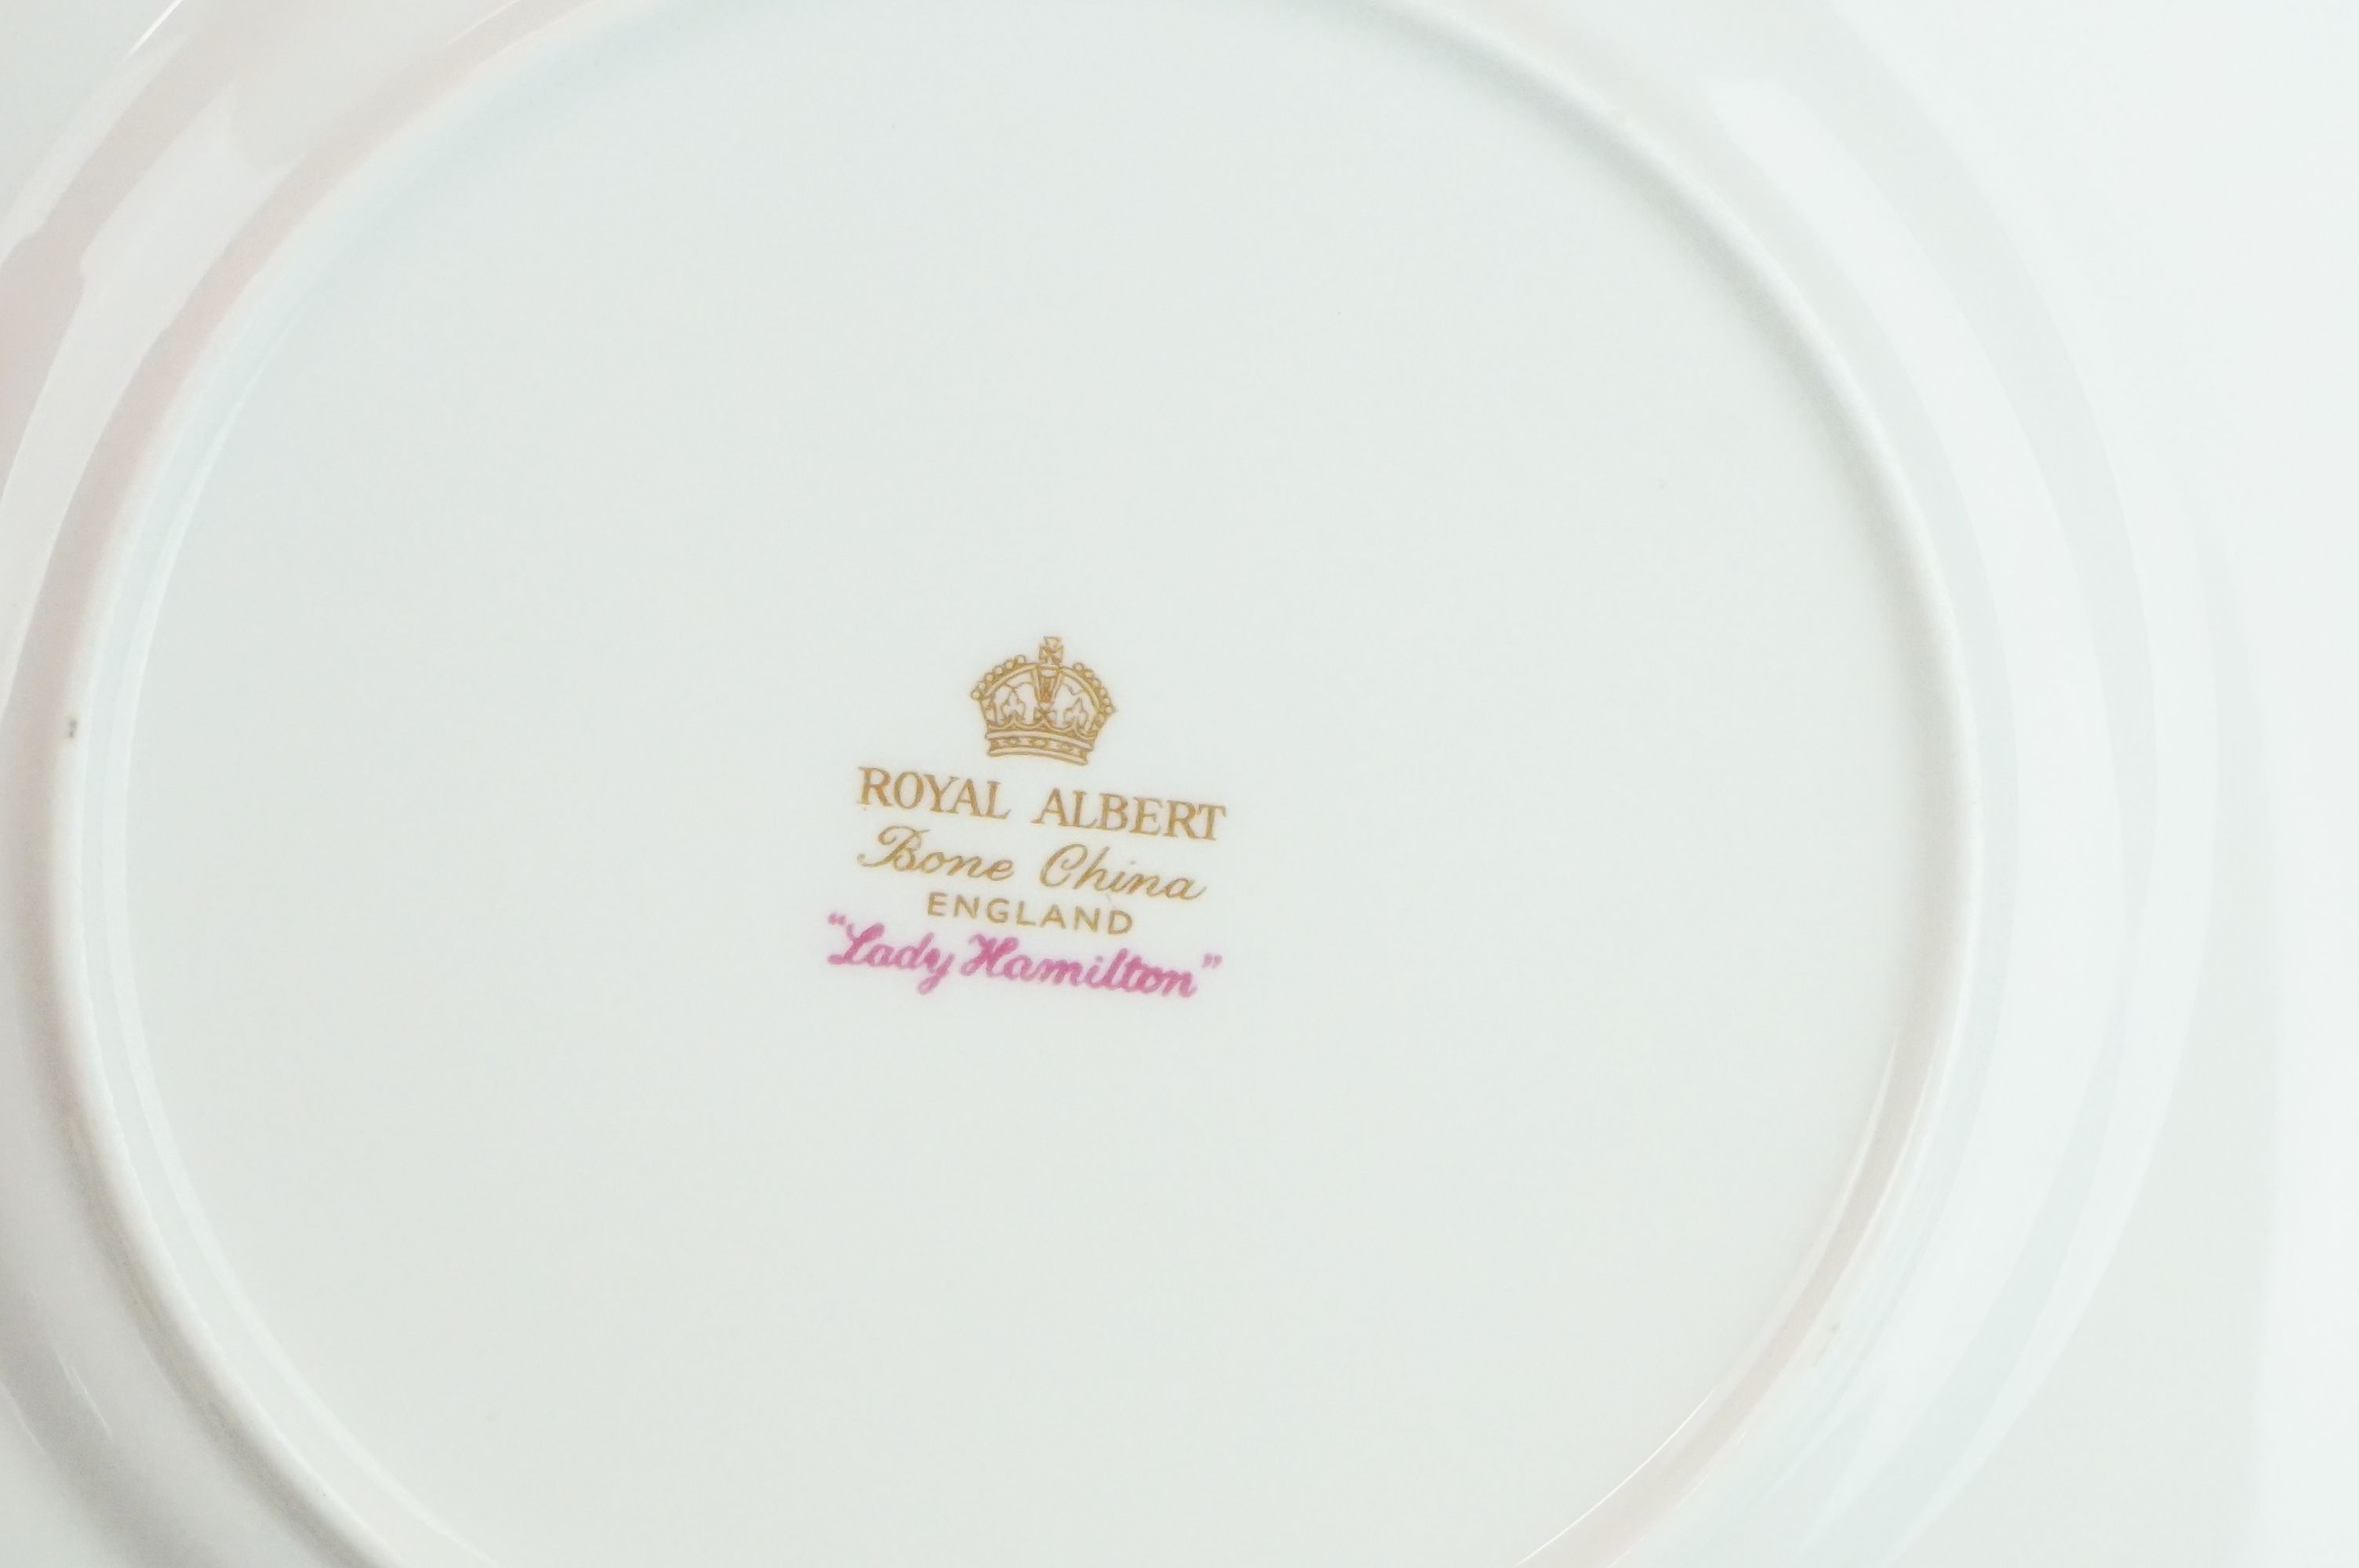 Royal Albert Lady Hamilton tea service consisting of 12 tea cups, 11 saucers, two creamer jugs, salt - Image 9 of 11